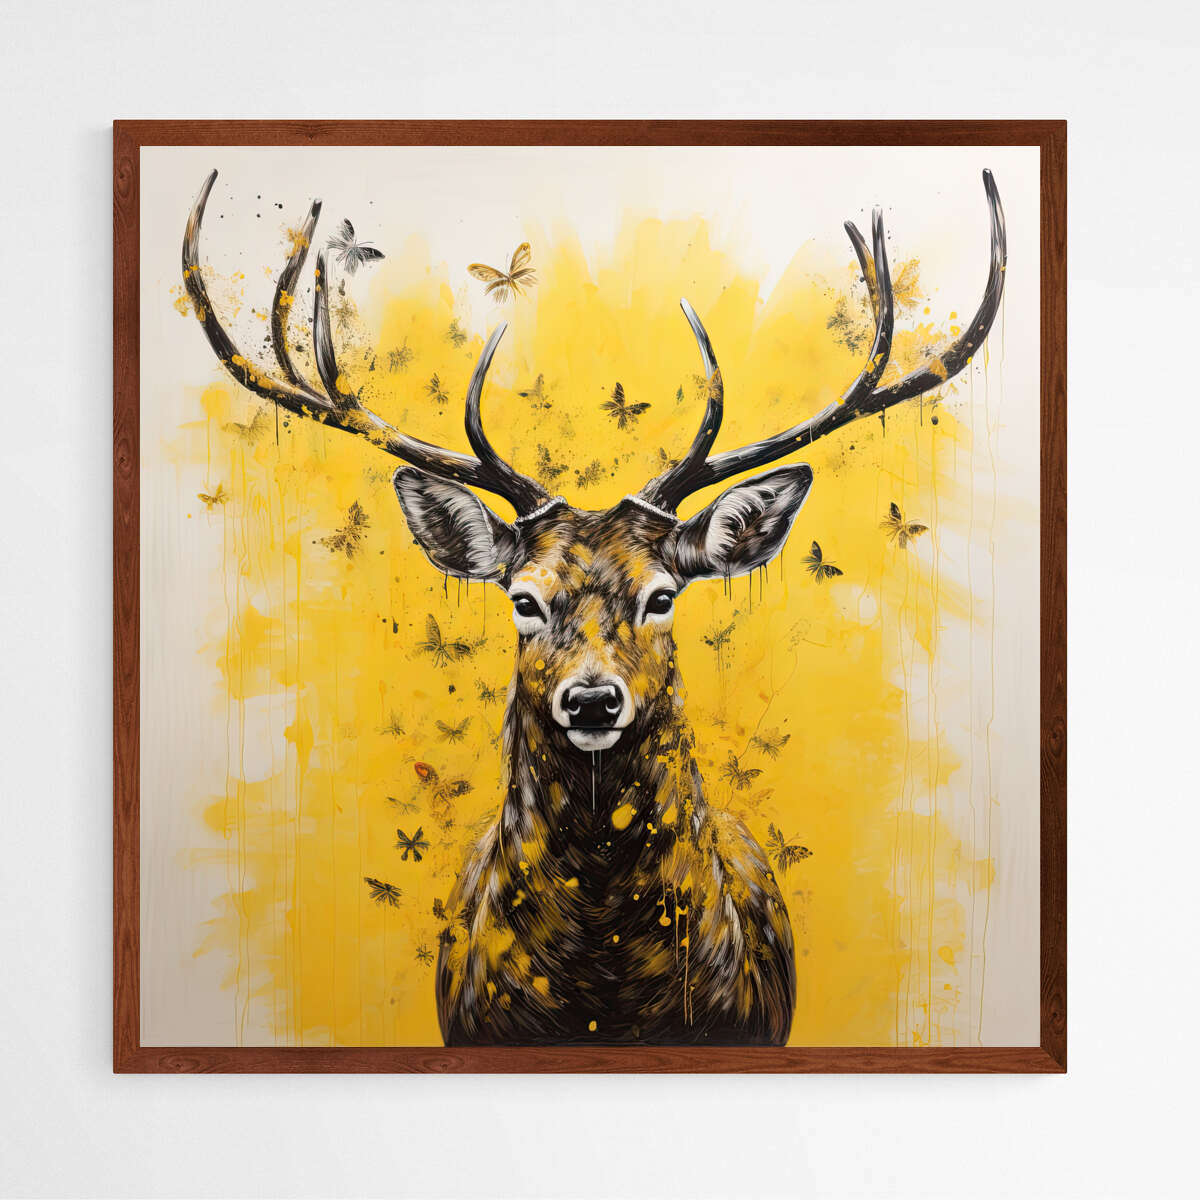 Contemporary Deer Yellow Splash Backdrop | Animals Wall Art Prints - The Canvas Hive